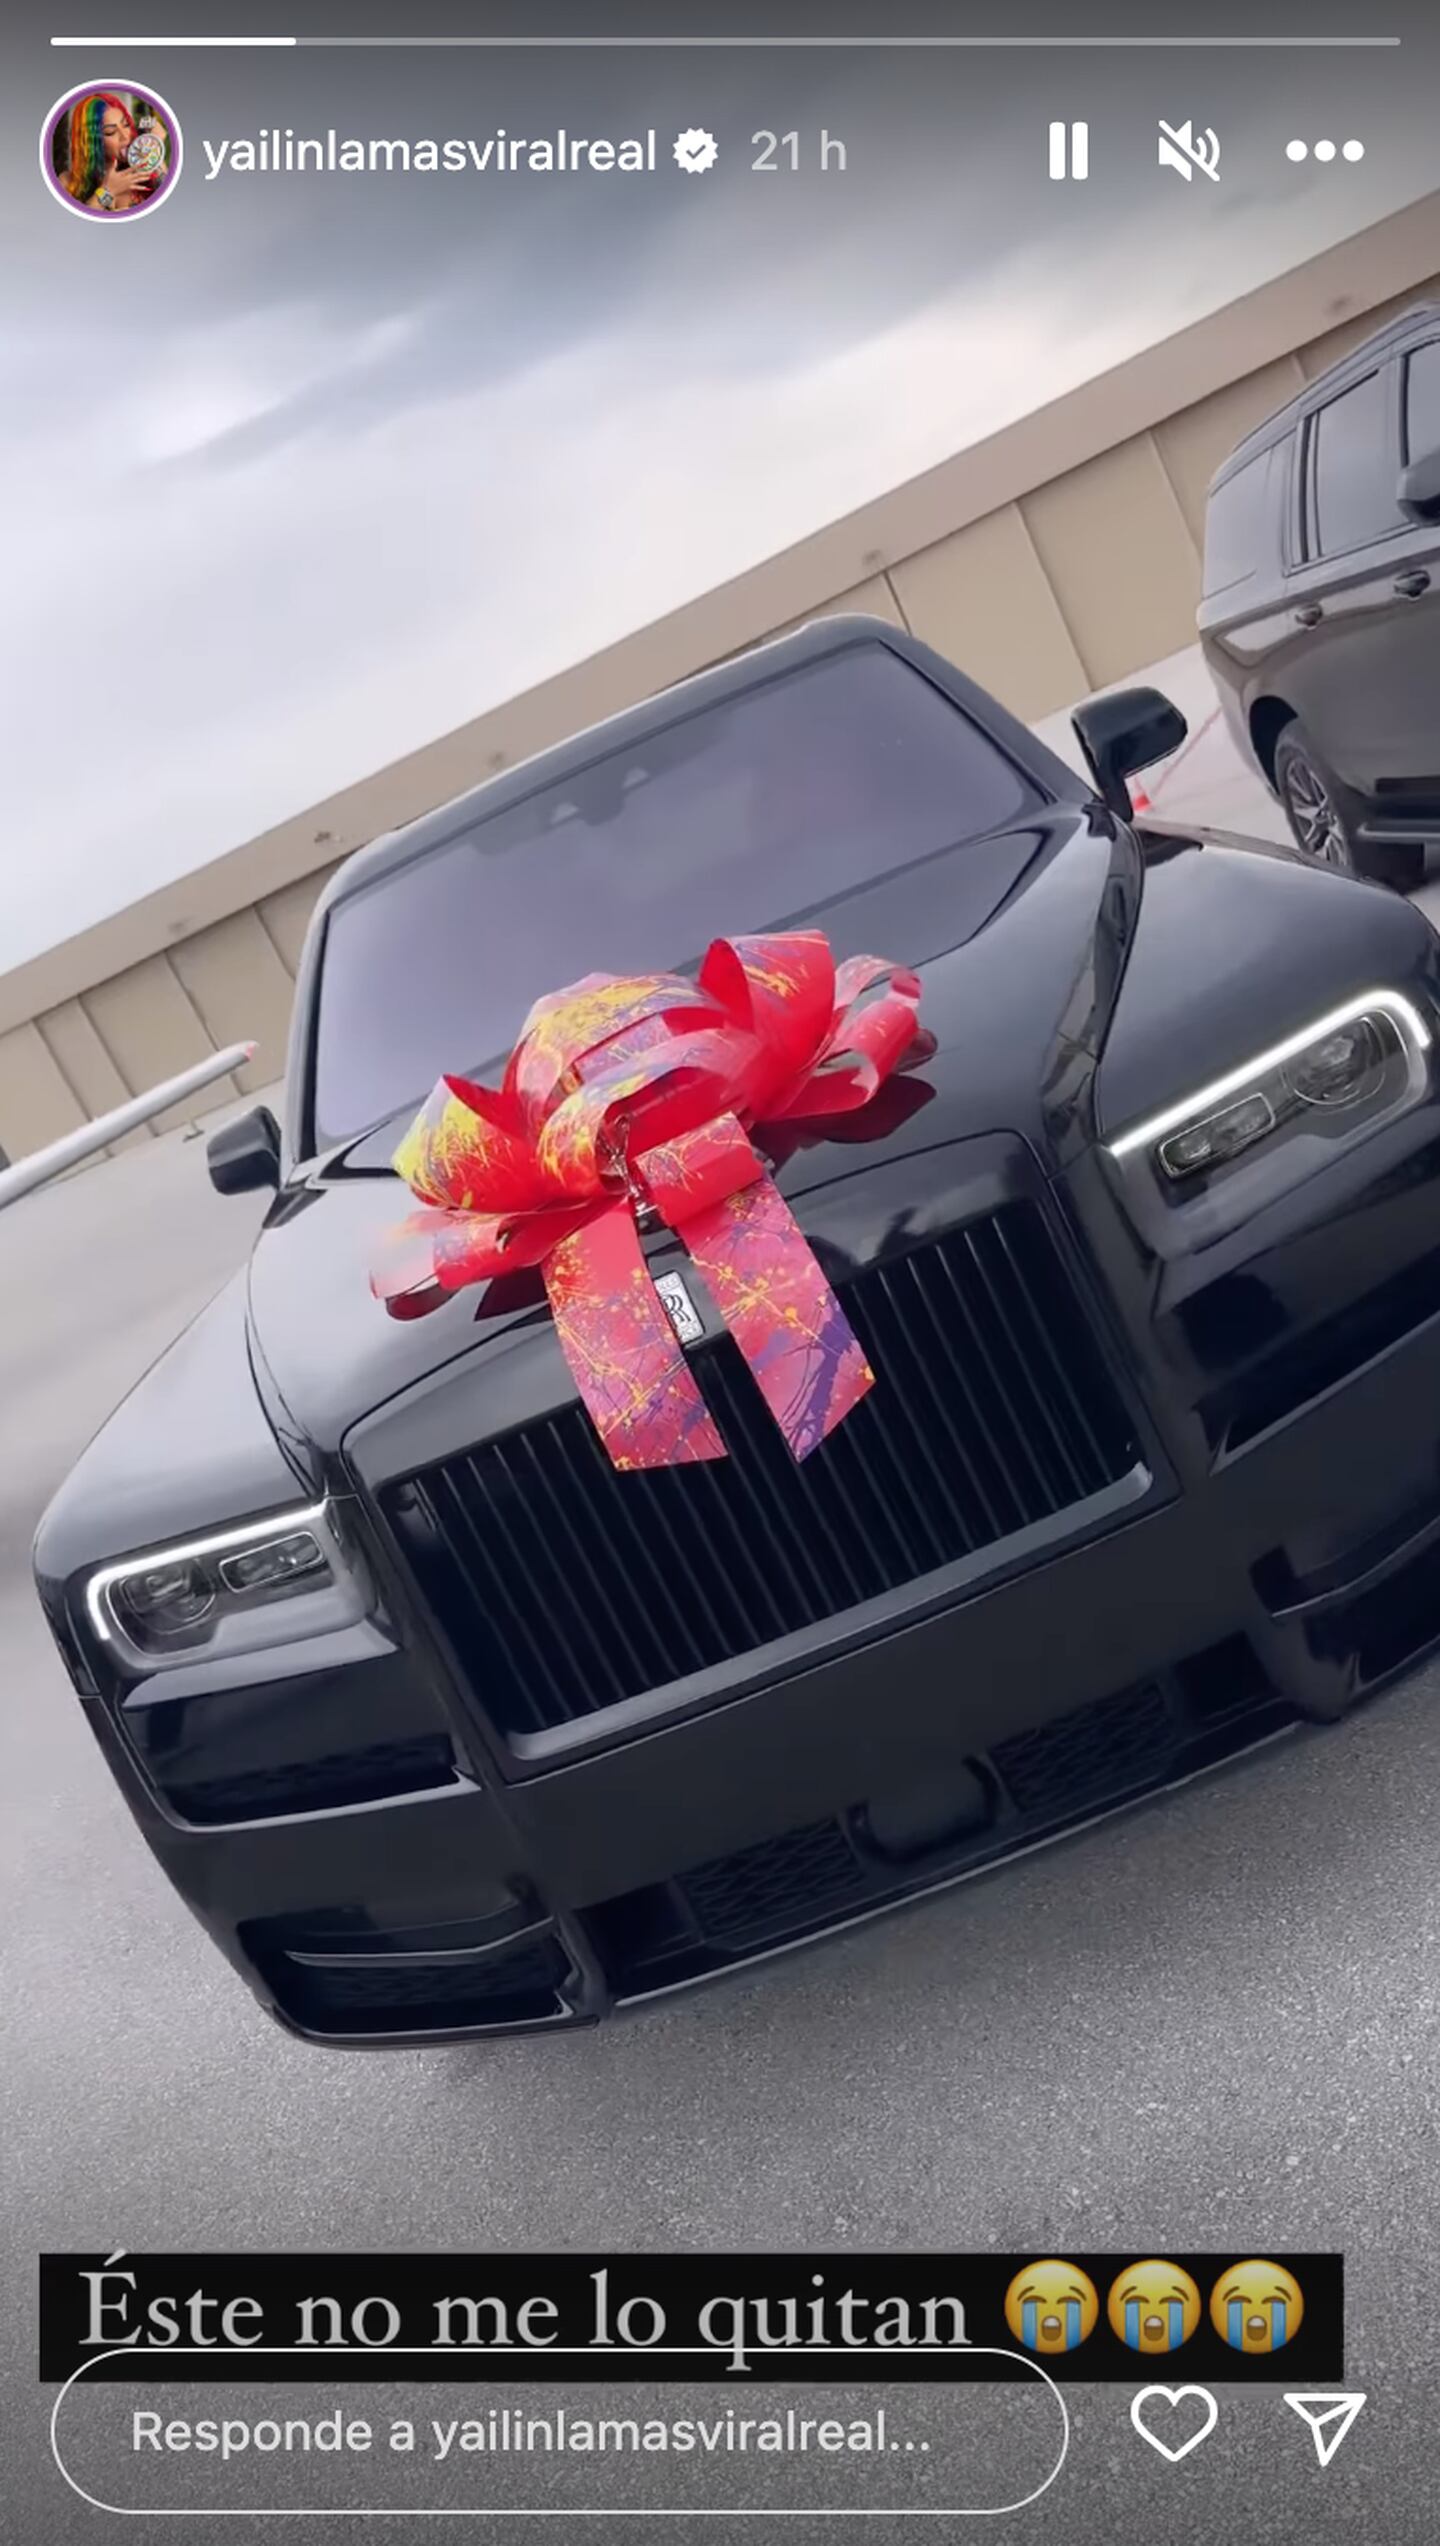 Tekashi 6ix9ine regala un Rolls-Royce Cullinan a Yailin la Más Viral